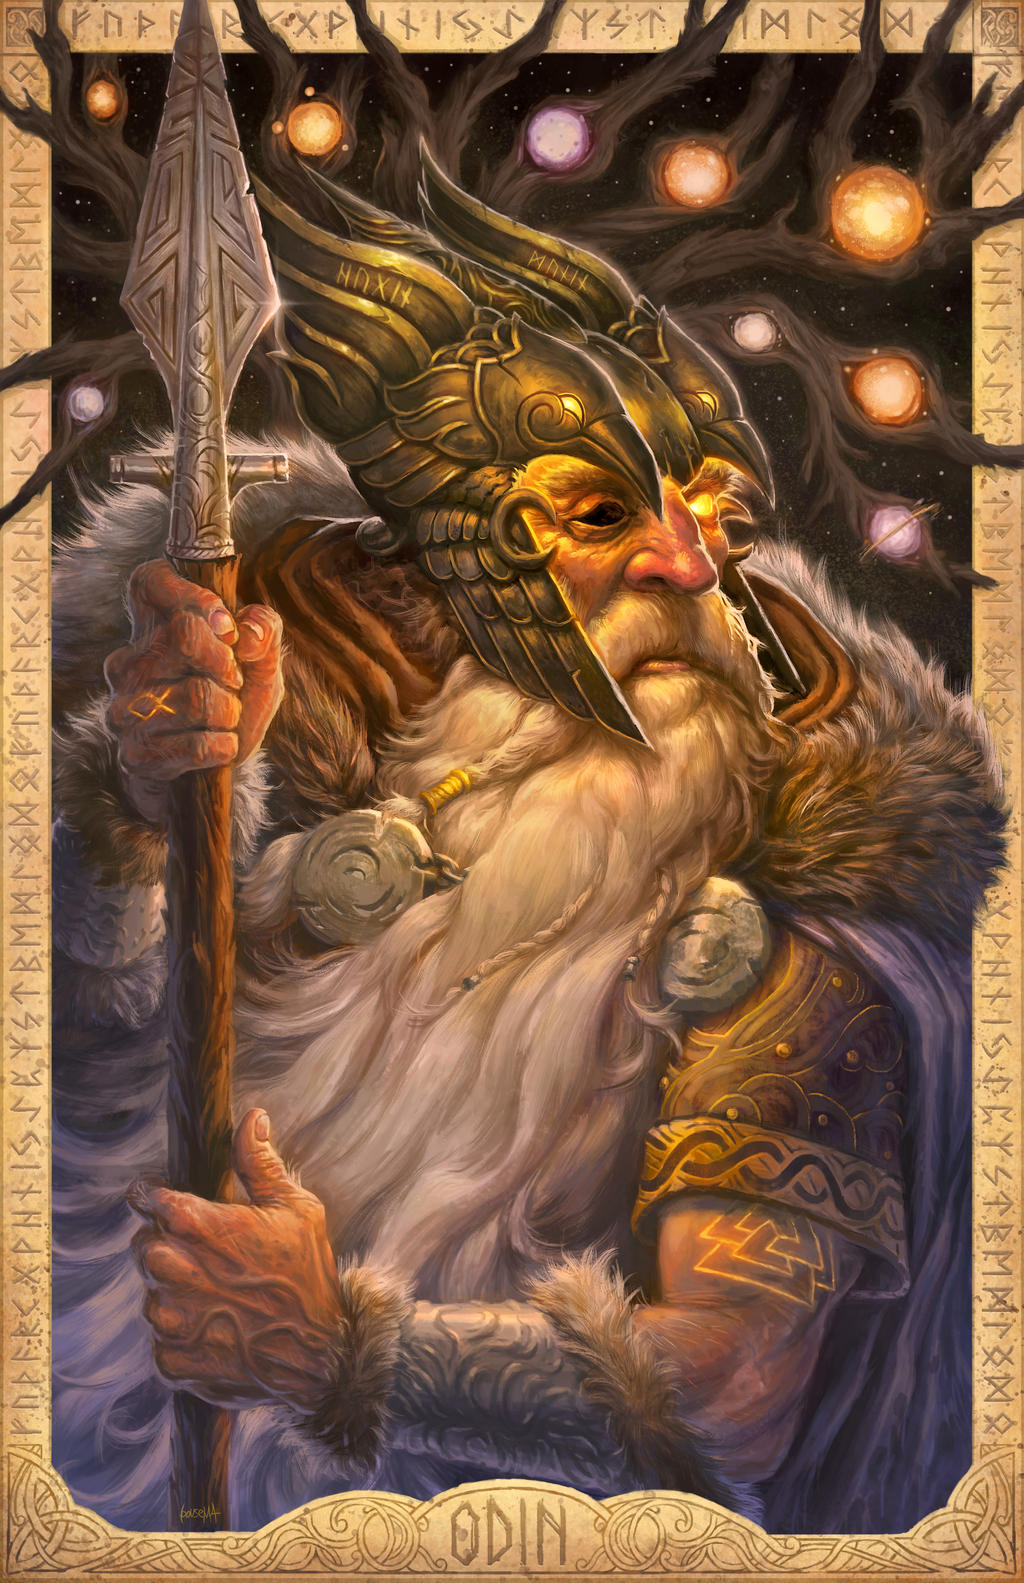 Odin by AdBersAI on DeviantArt